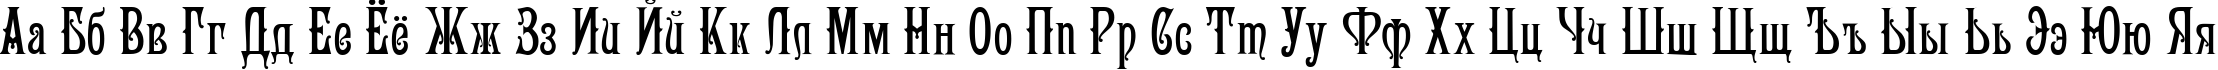 Пример написания русского алфавита шрифтом Victoriana